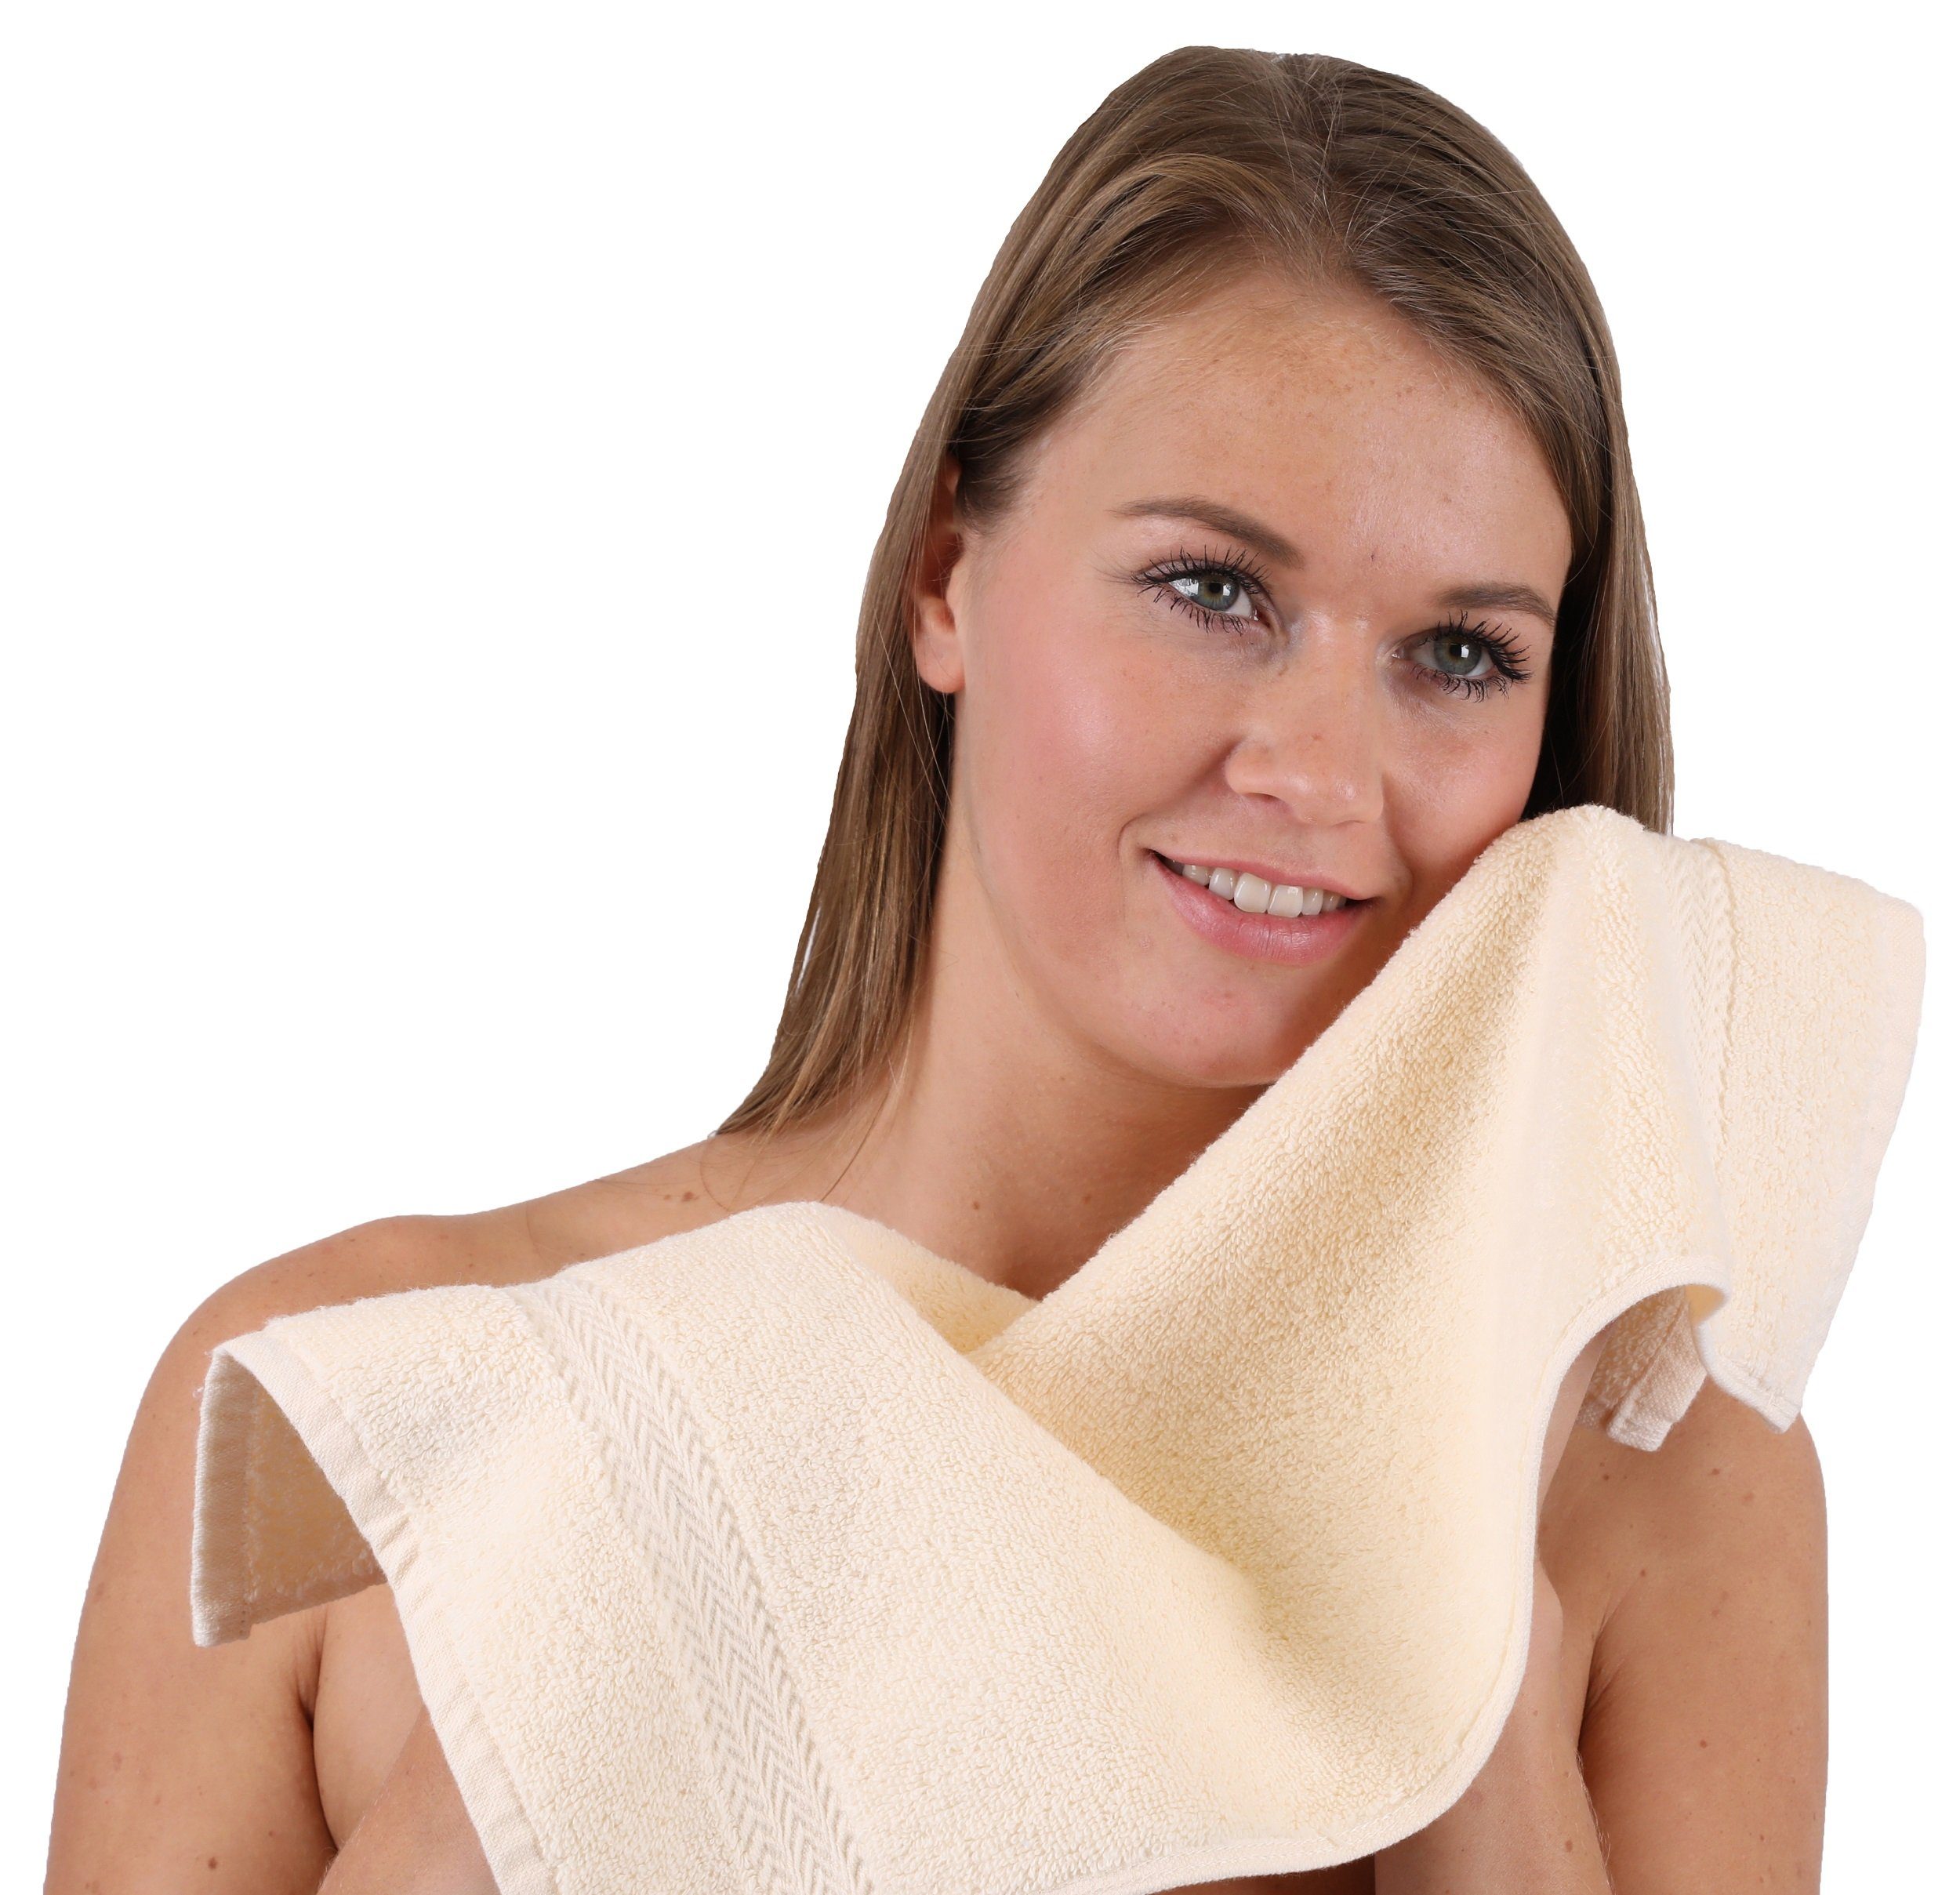 Handtuch-Set 2 4 2 Baumwolle, Beige, 100% Handtücher Betz Handtuch Set Premium Baumwolle Nuss 10-TLG. 2 (10-tlg) Duschtücher Gästetücher 100% Braun Waschhandschuhe Farbe &